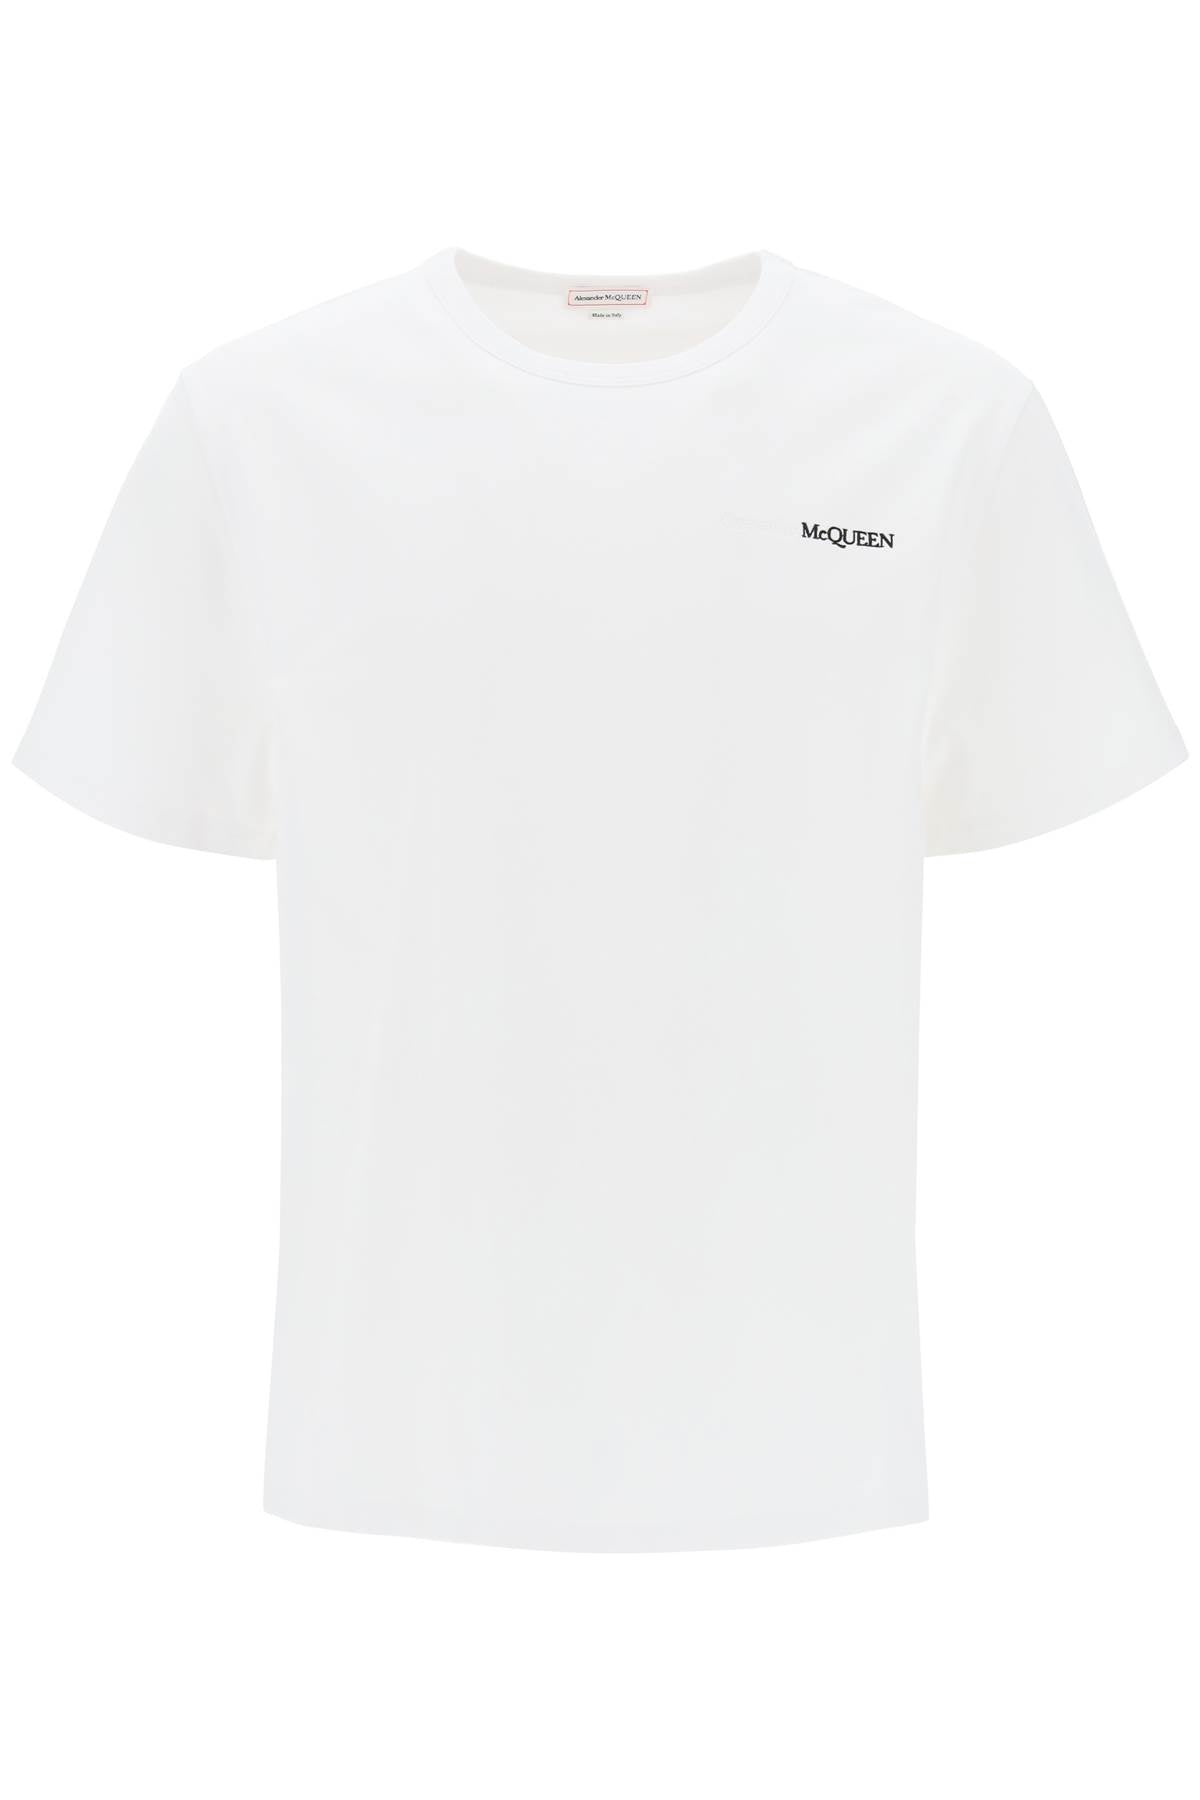 Alexander mcqueen reflected logo t-shirt 776281 QXAAB WHITE WHITE BLACK